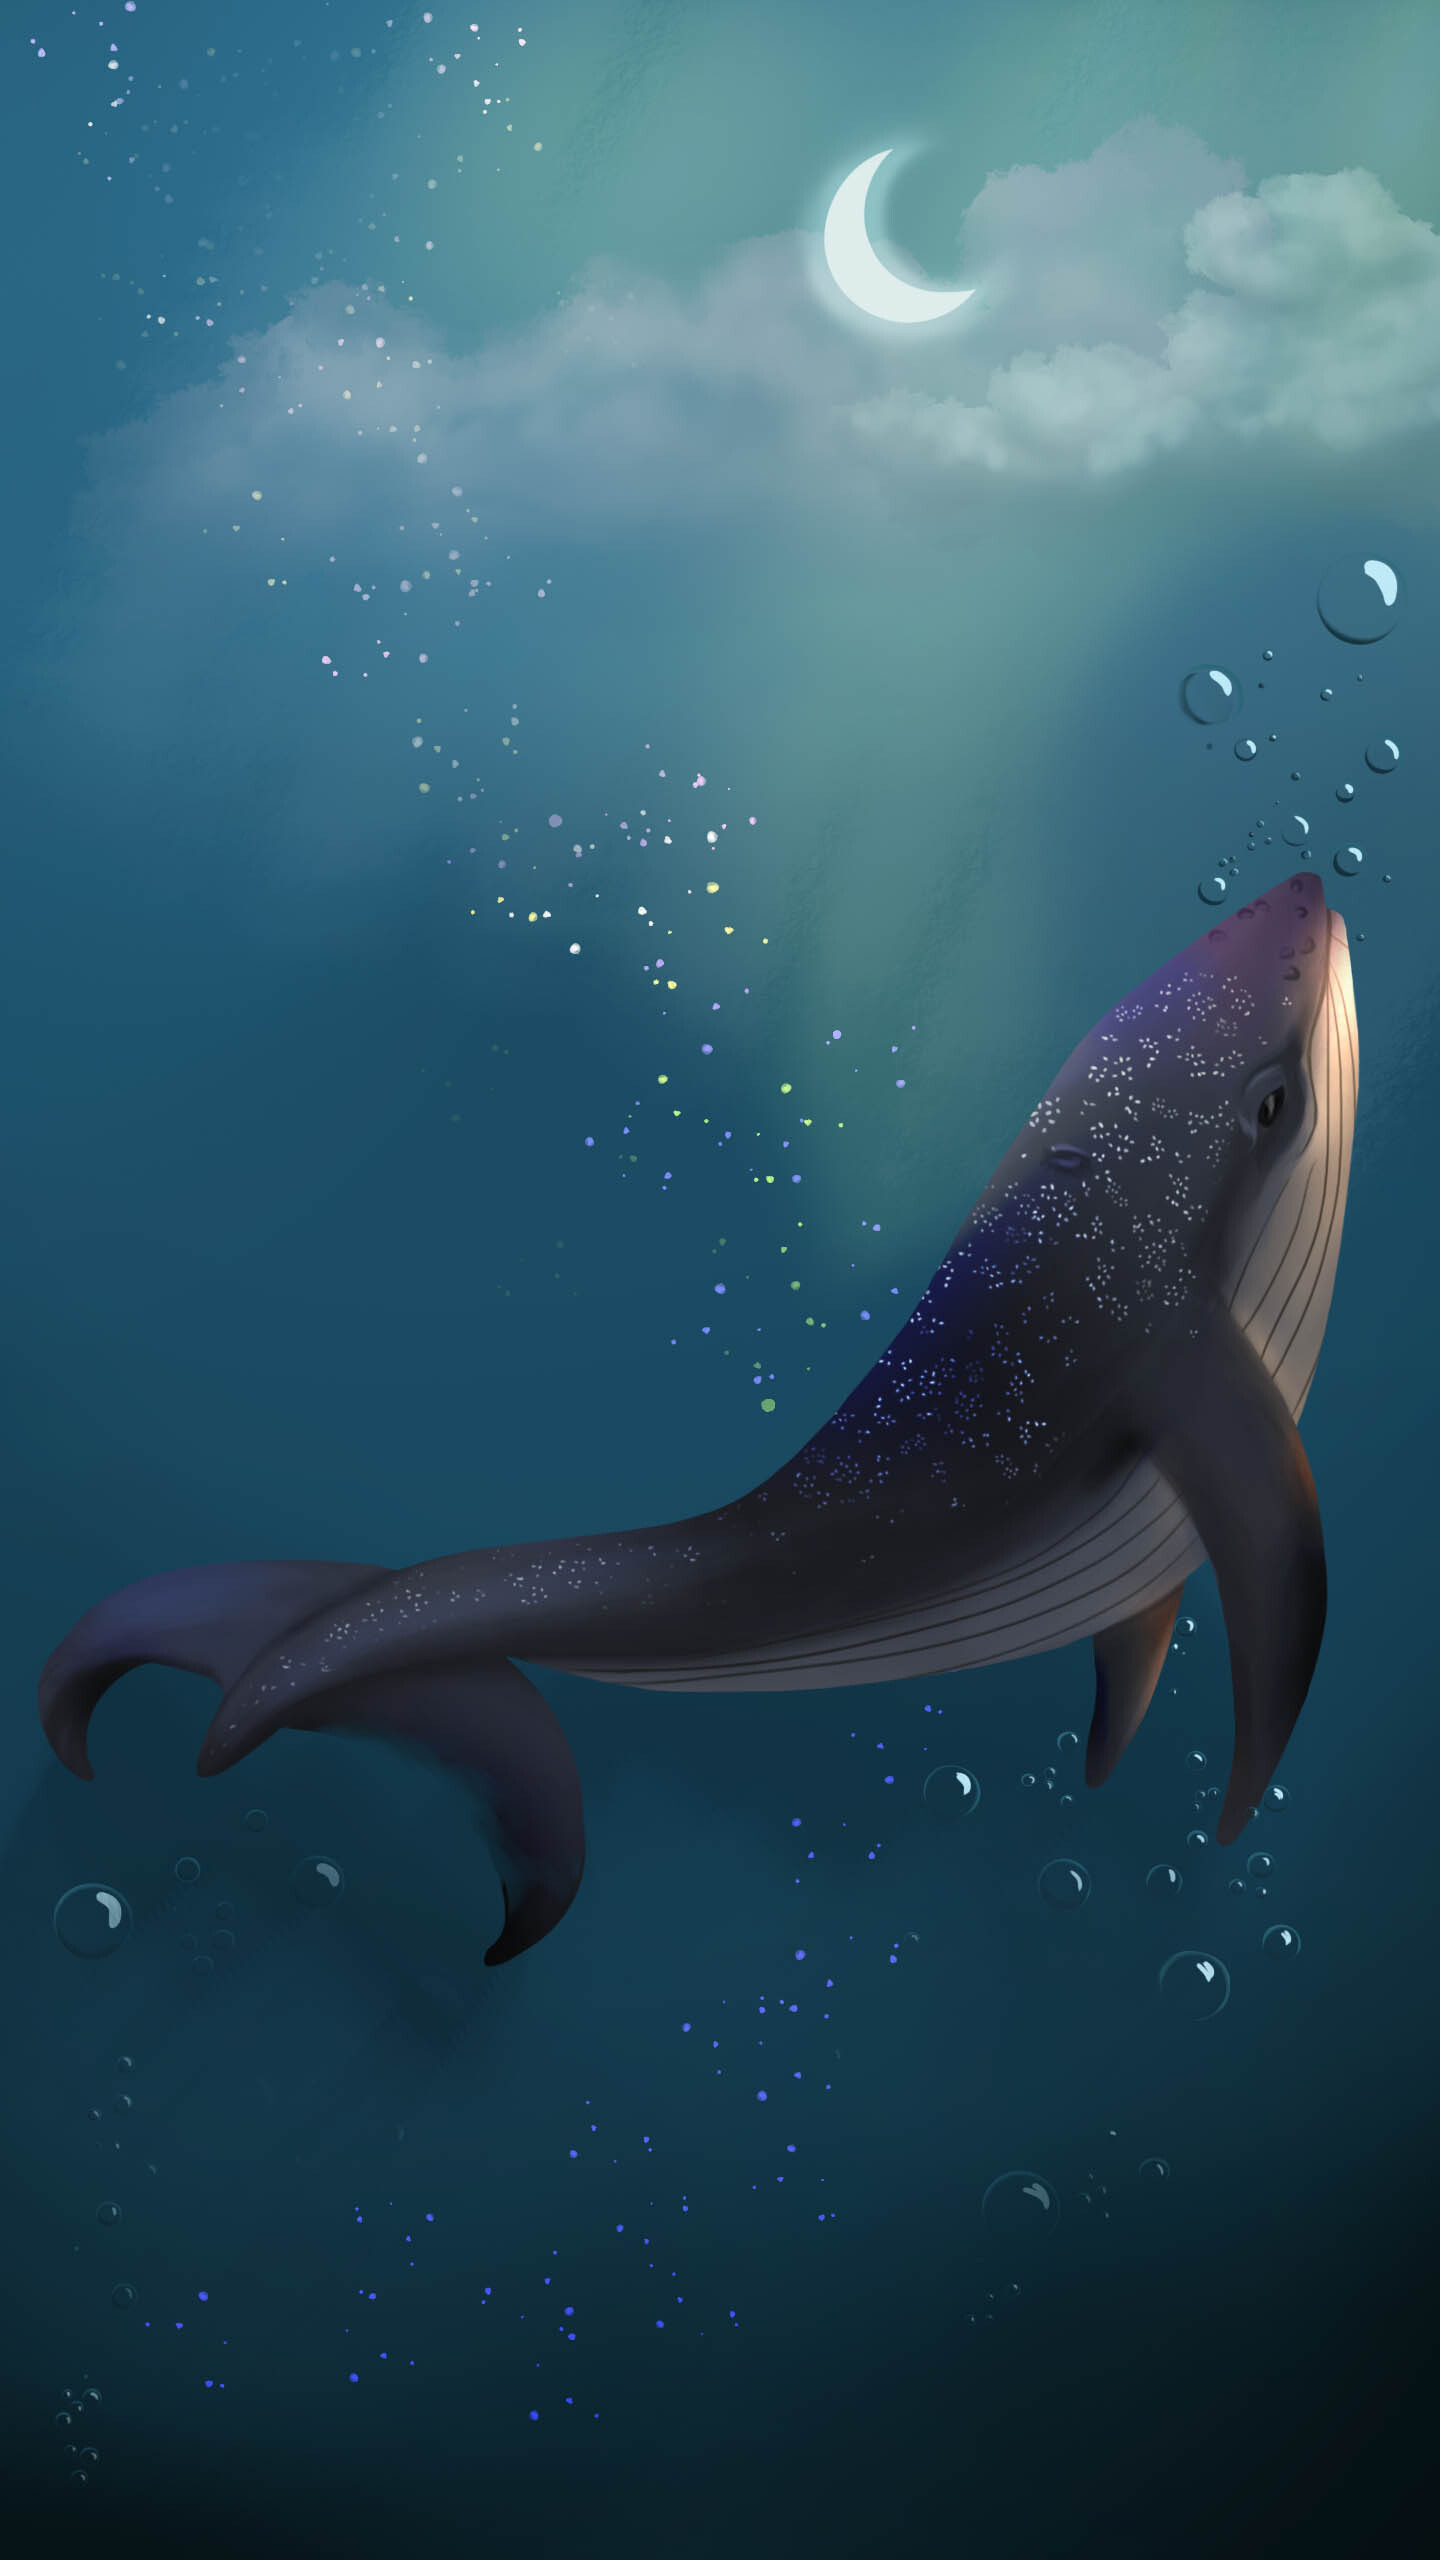 ArtStation - Mystical whale